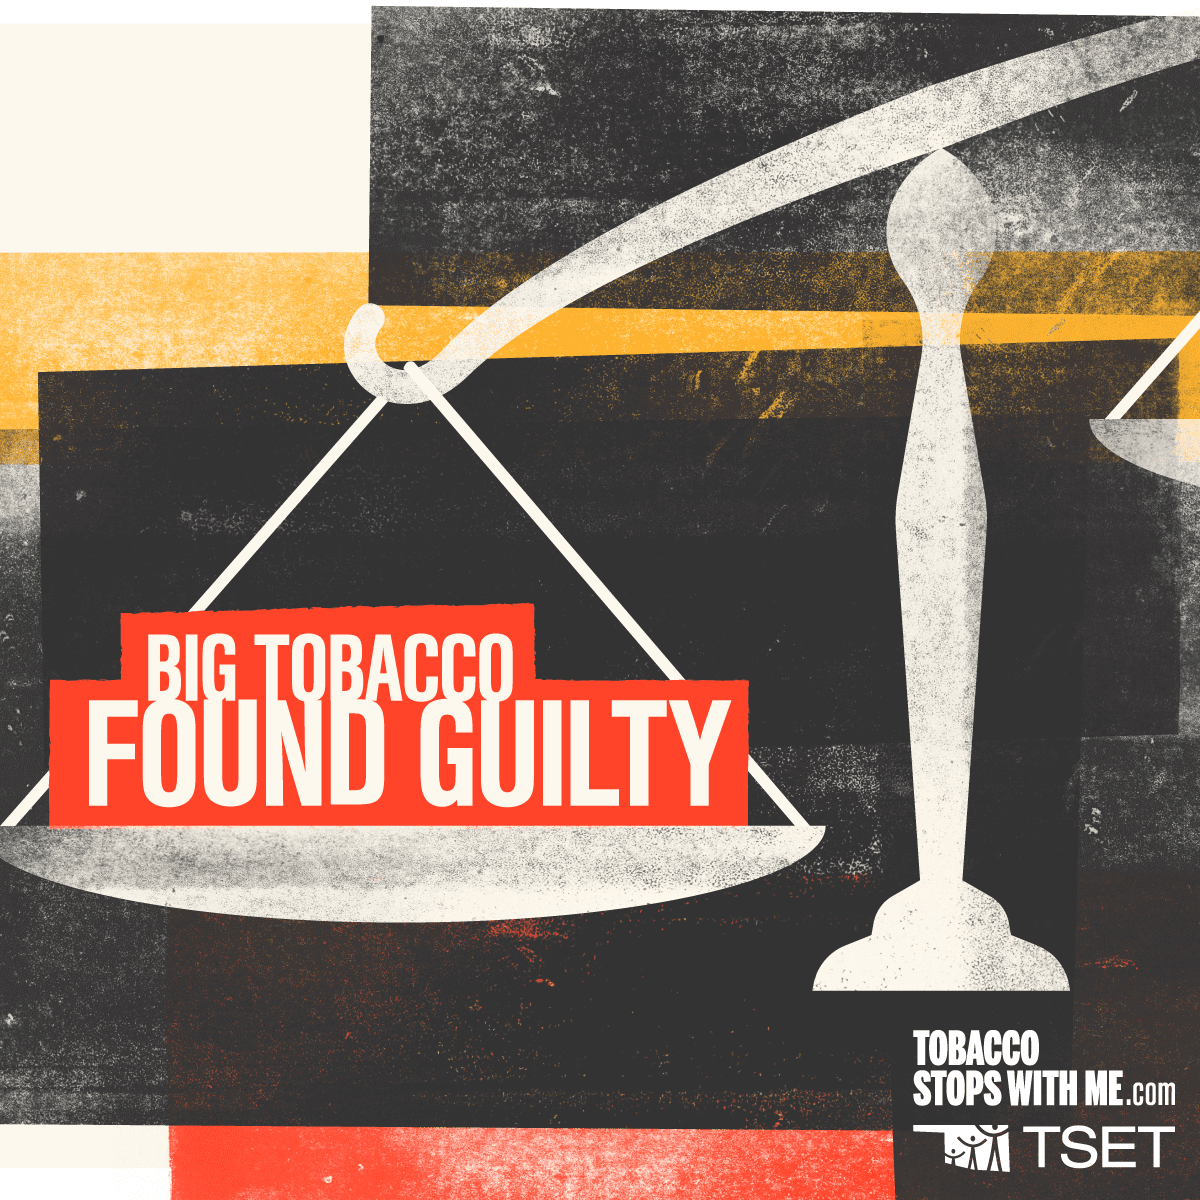 Big tobacco found guilty